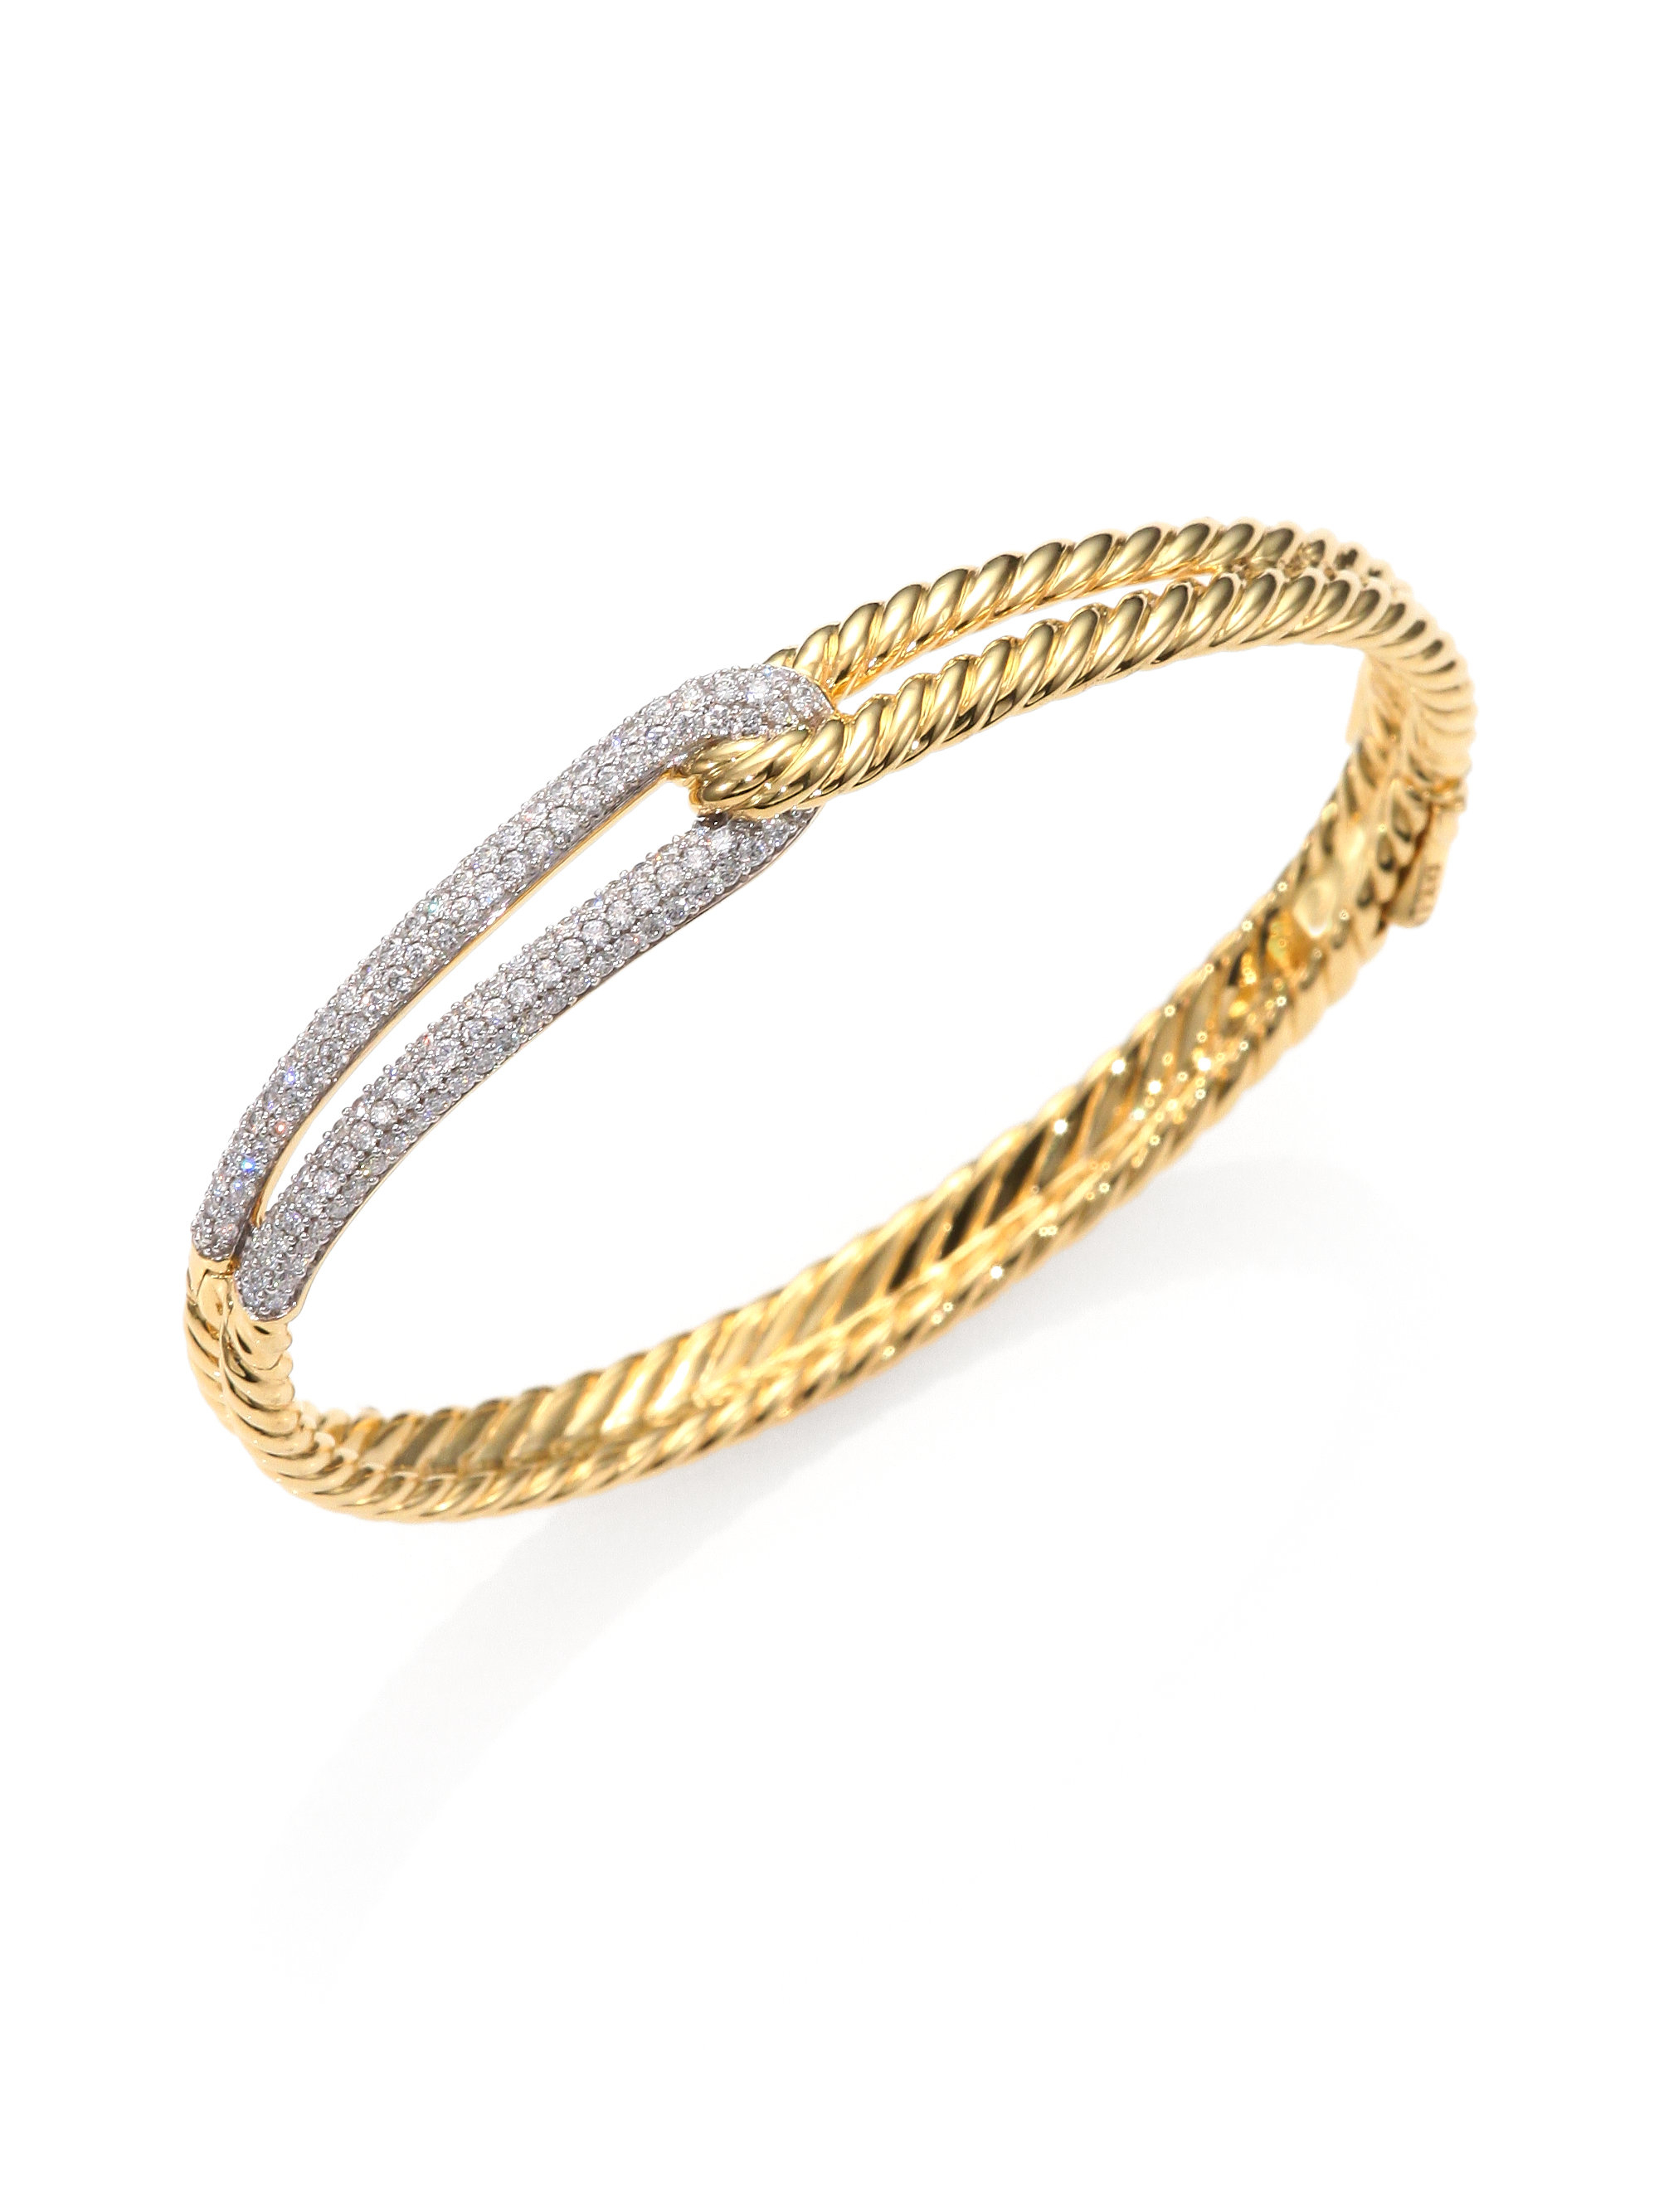 David Yurman Labyrinth Diamond 18k Yellow Gold Bangle Bracelet in